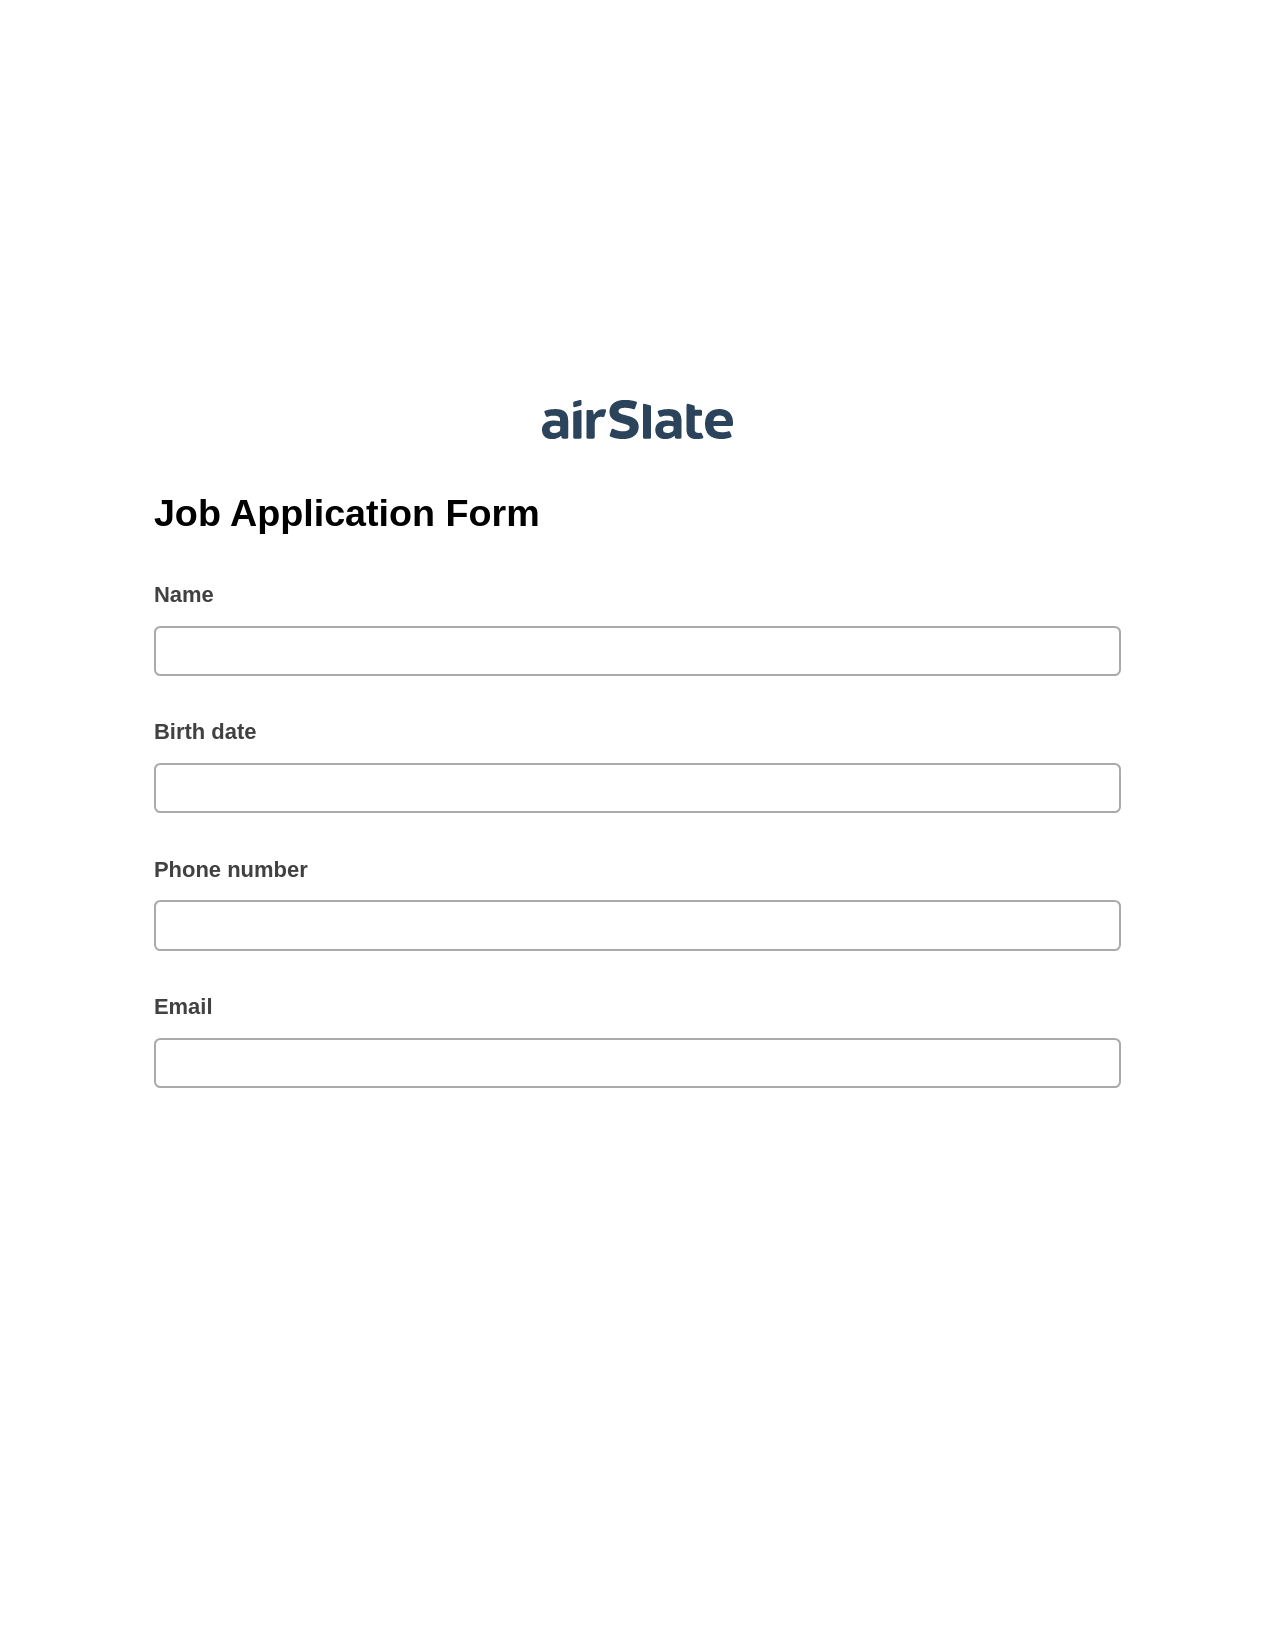 Job Application Form Pre-fill Slate from MS Dynamics 365 Records Bot, Google Calendar Bot, Export to Google Sheet Bot